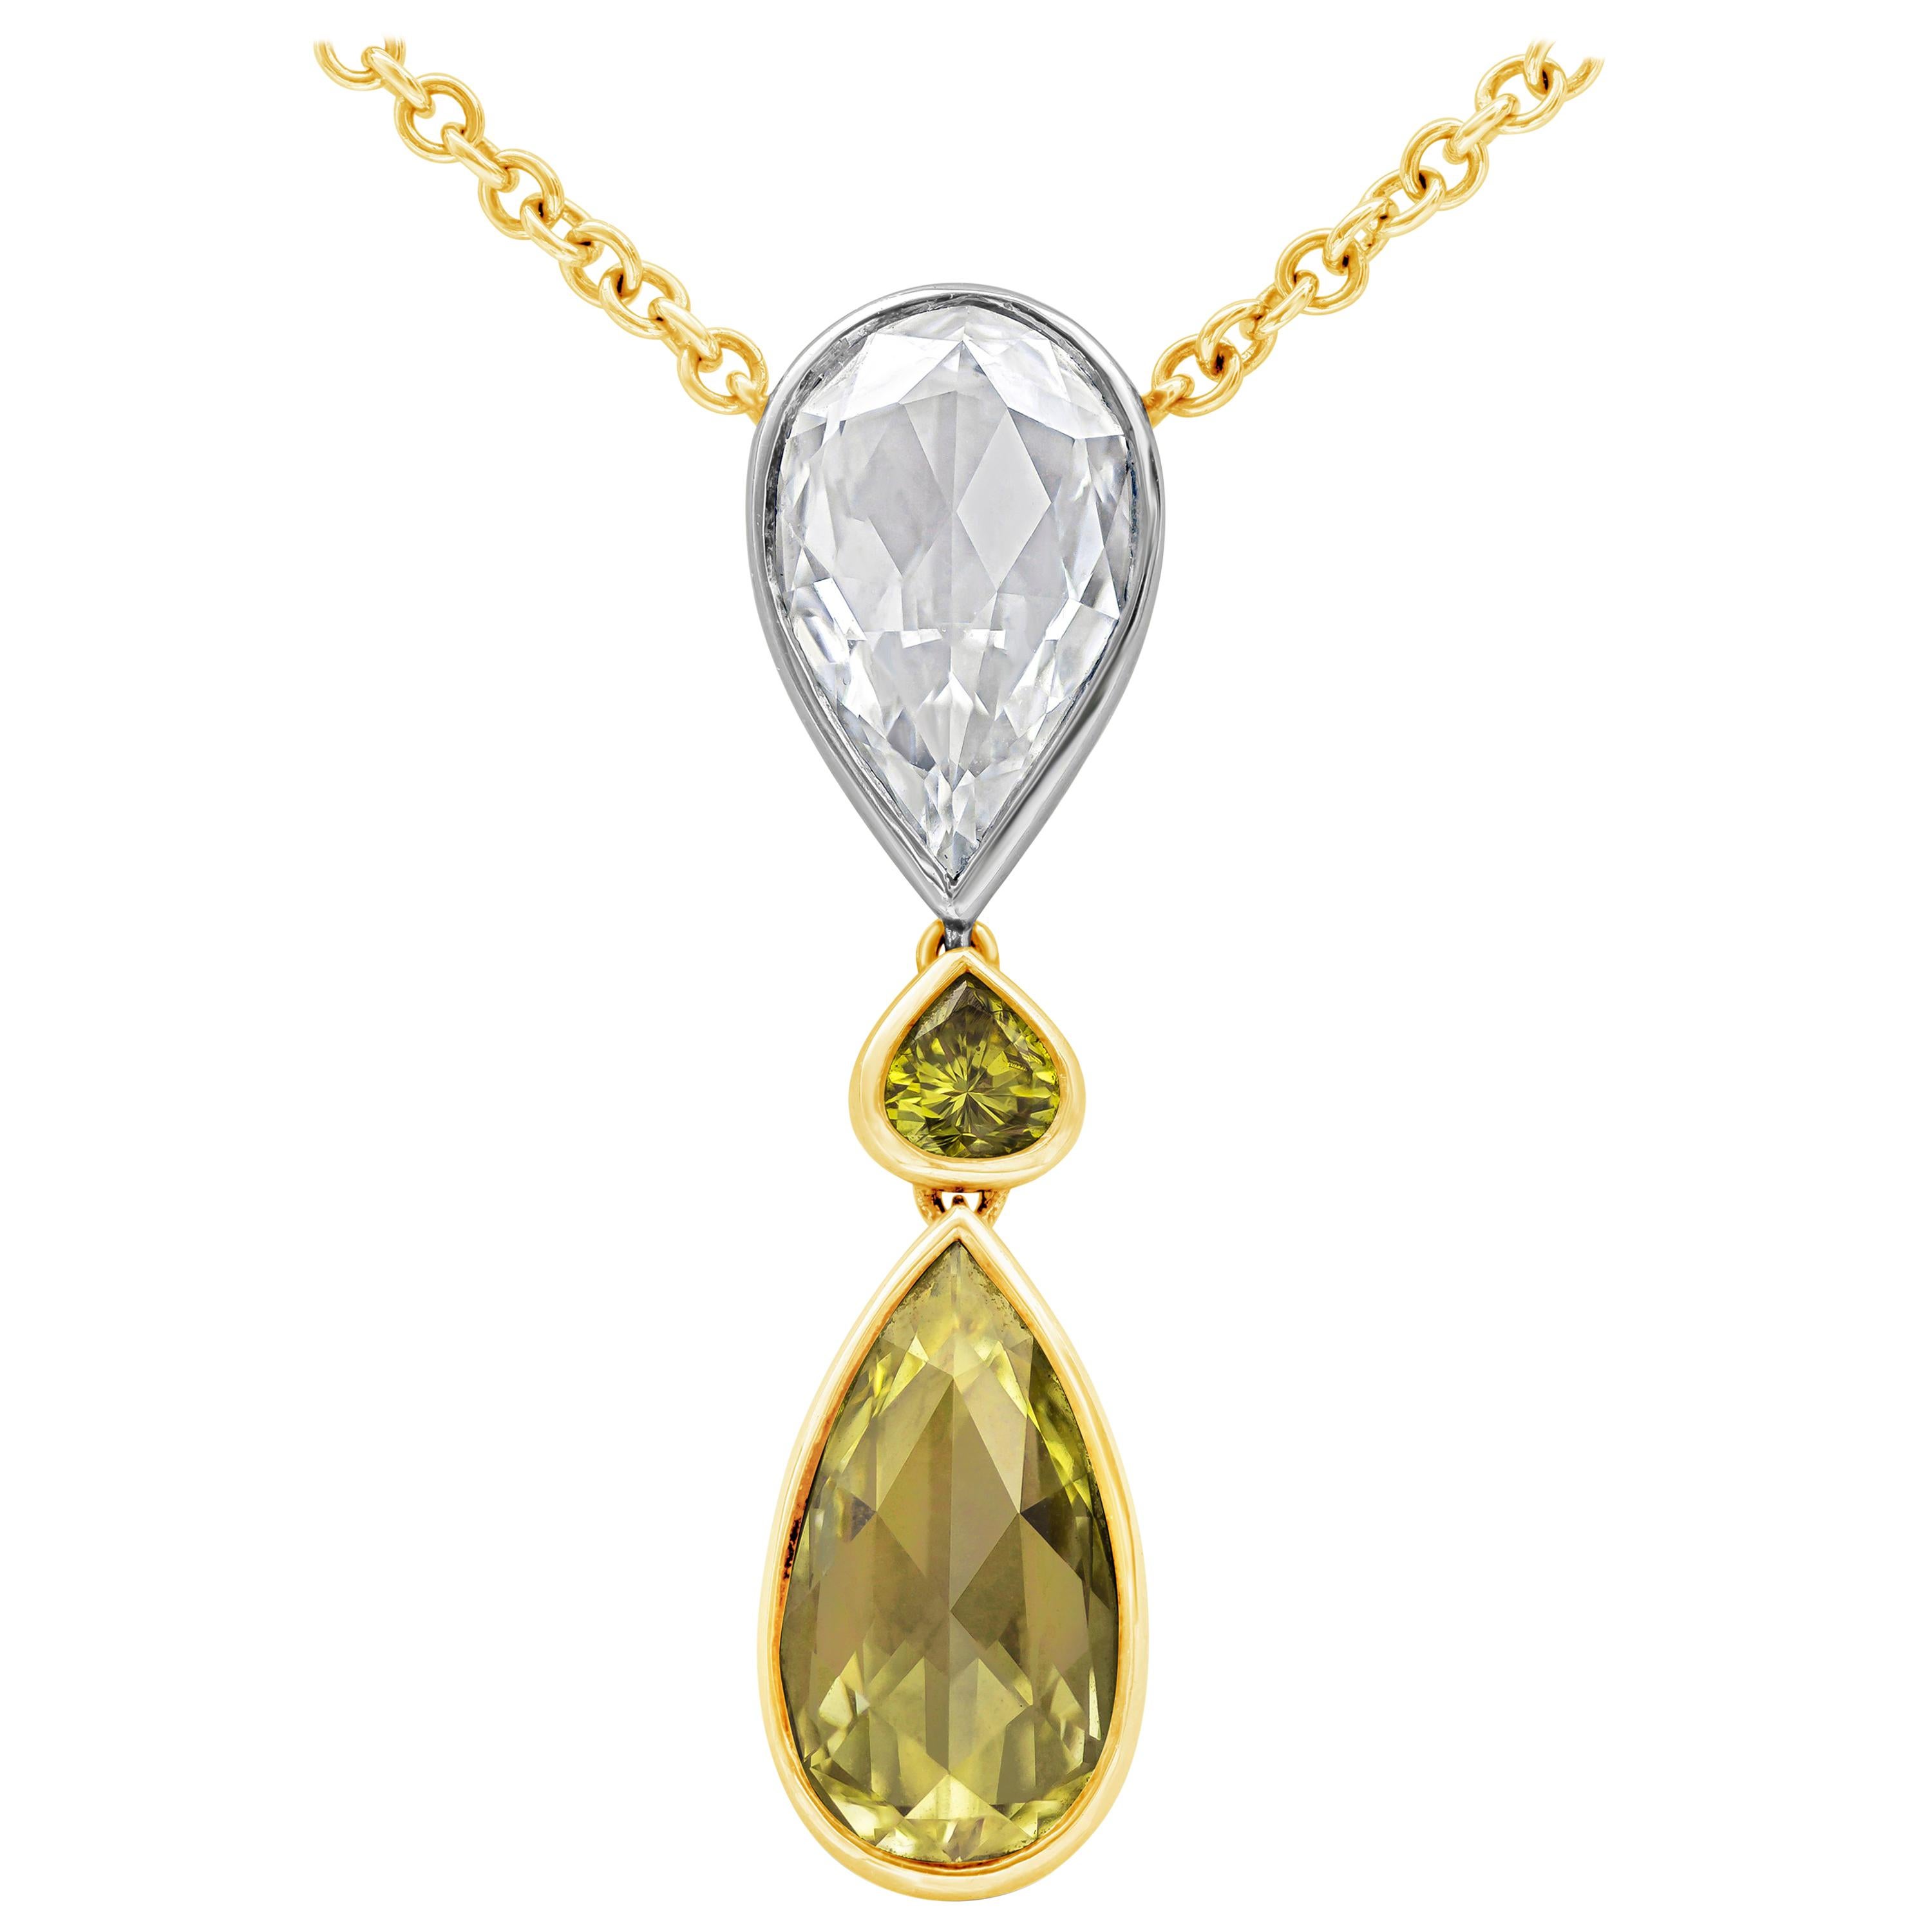 2.47 Carats Total Pear Cut Fancy Intense Yellow & White Diamond Pendant Necklace